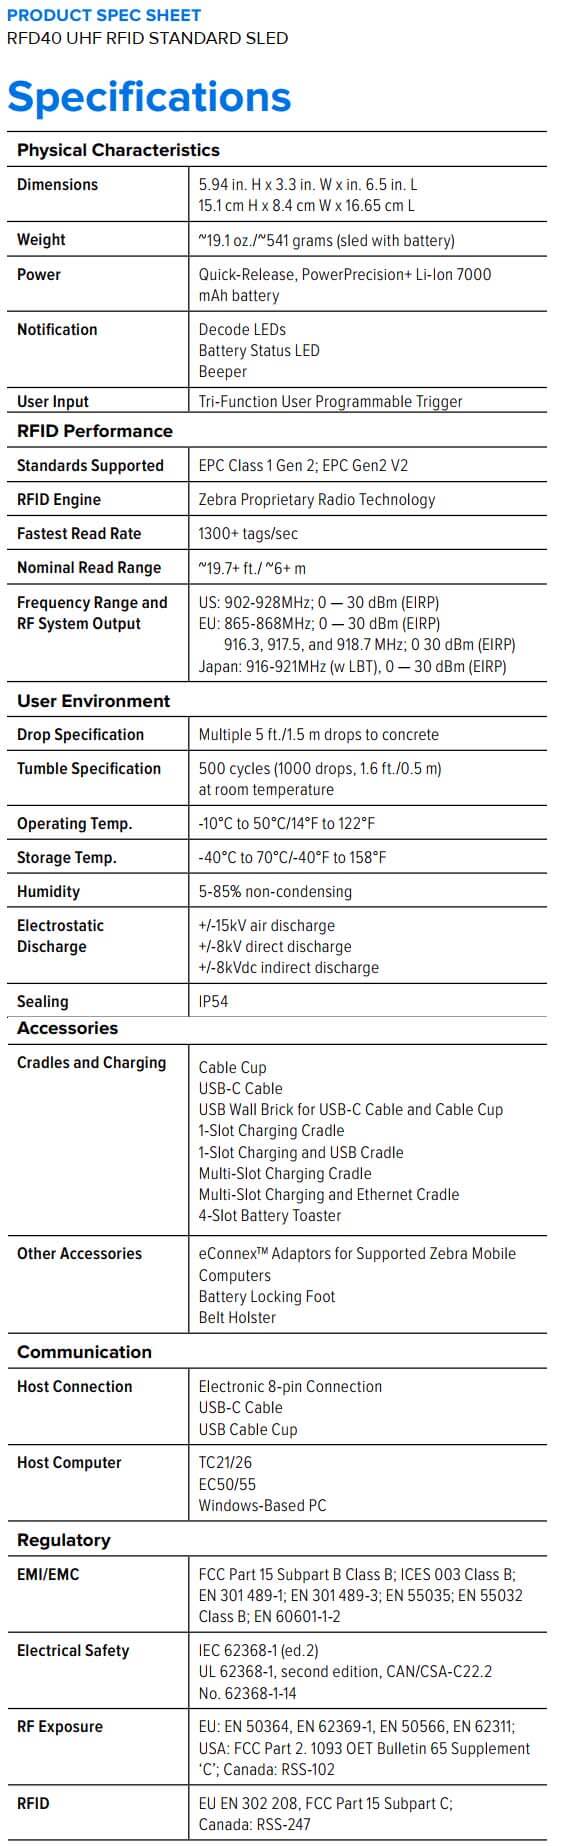 Zebra RFD40 UHF RFID Standard Sled data sheet